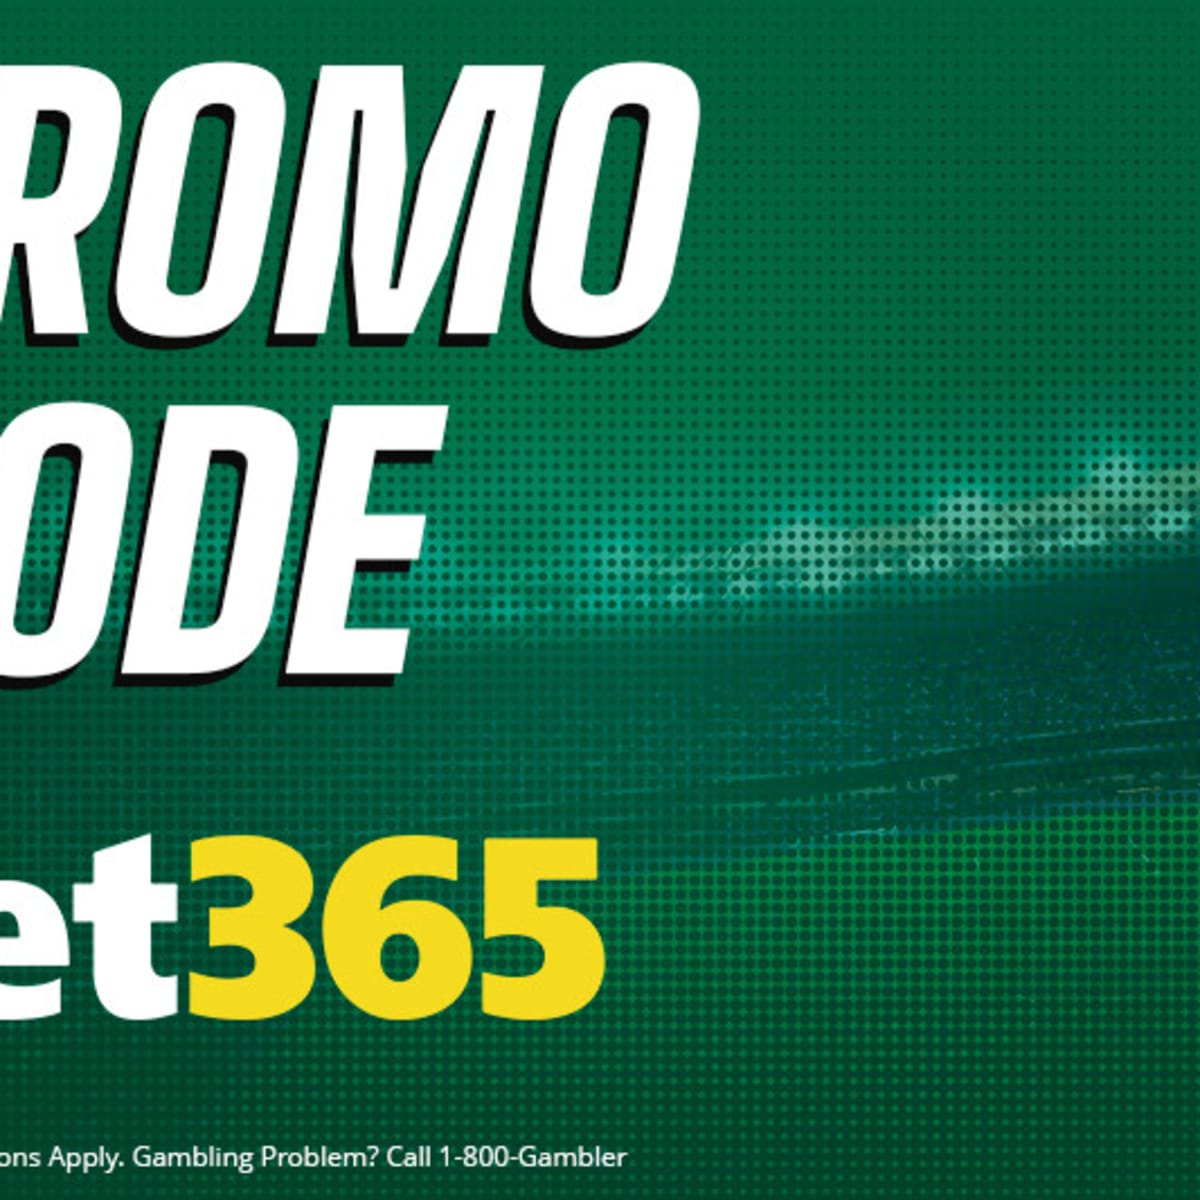 Bet365 Free Bets : Use this Bonus code WATO365